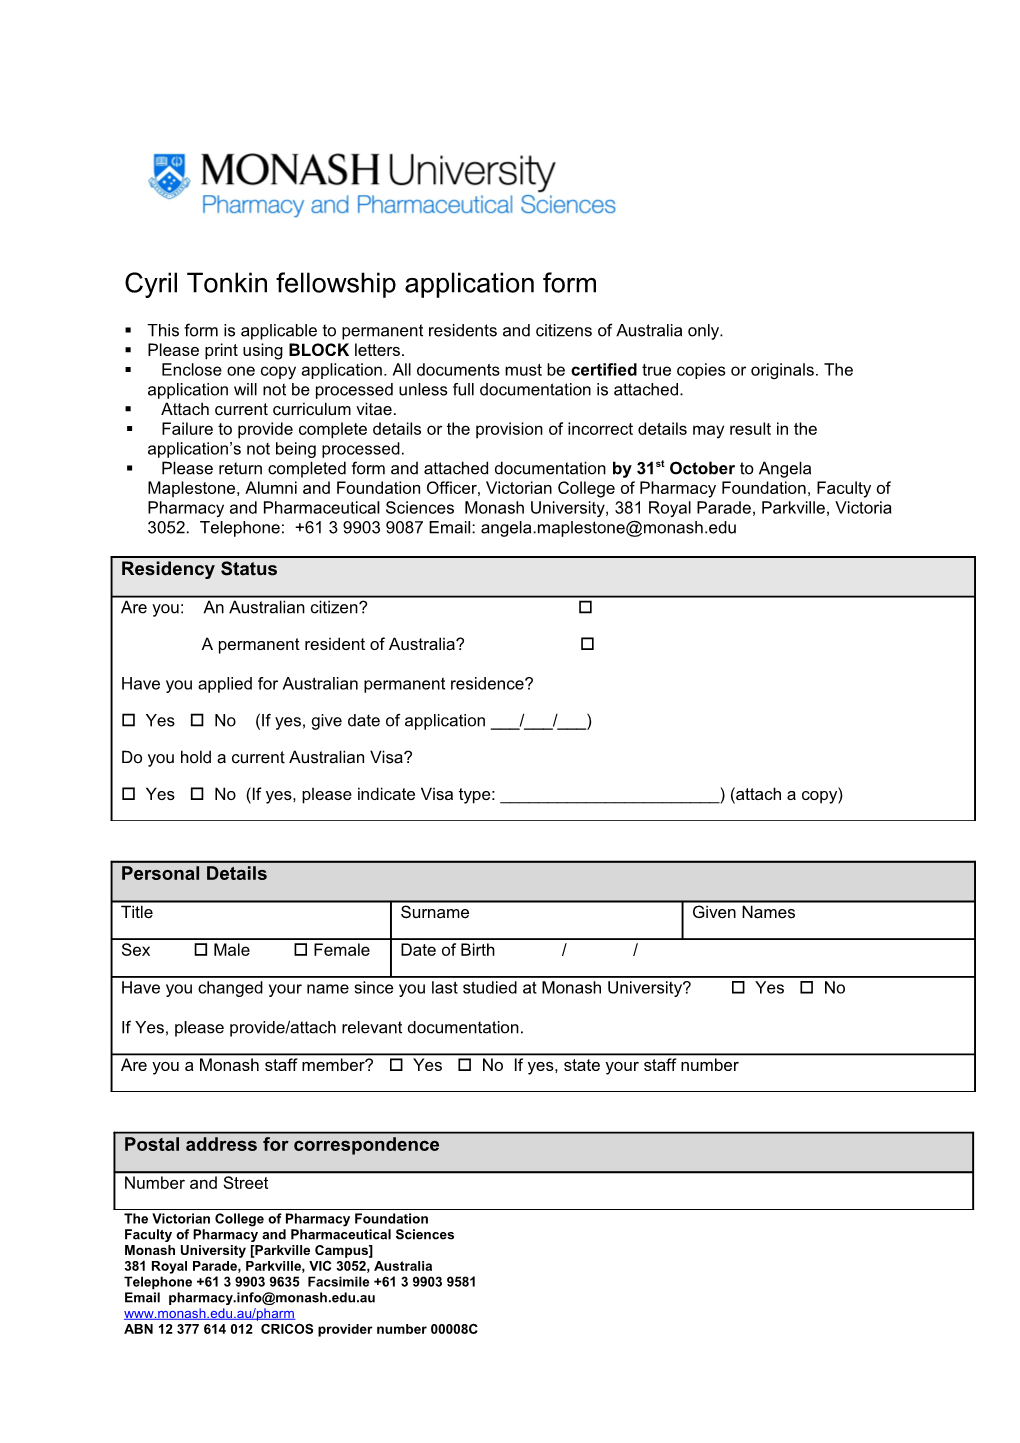 Cyril Tonkin Fellowship Application Form